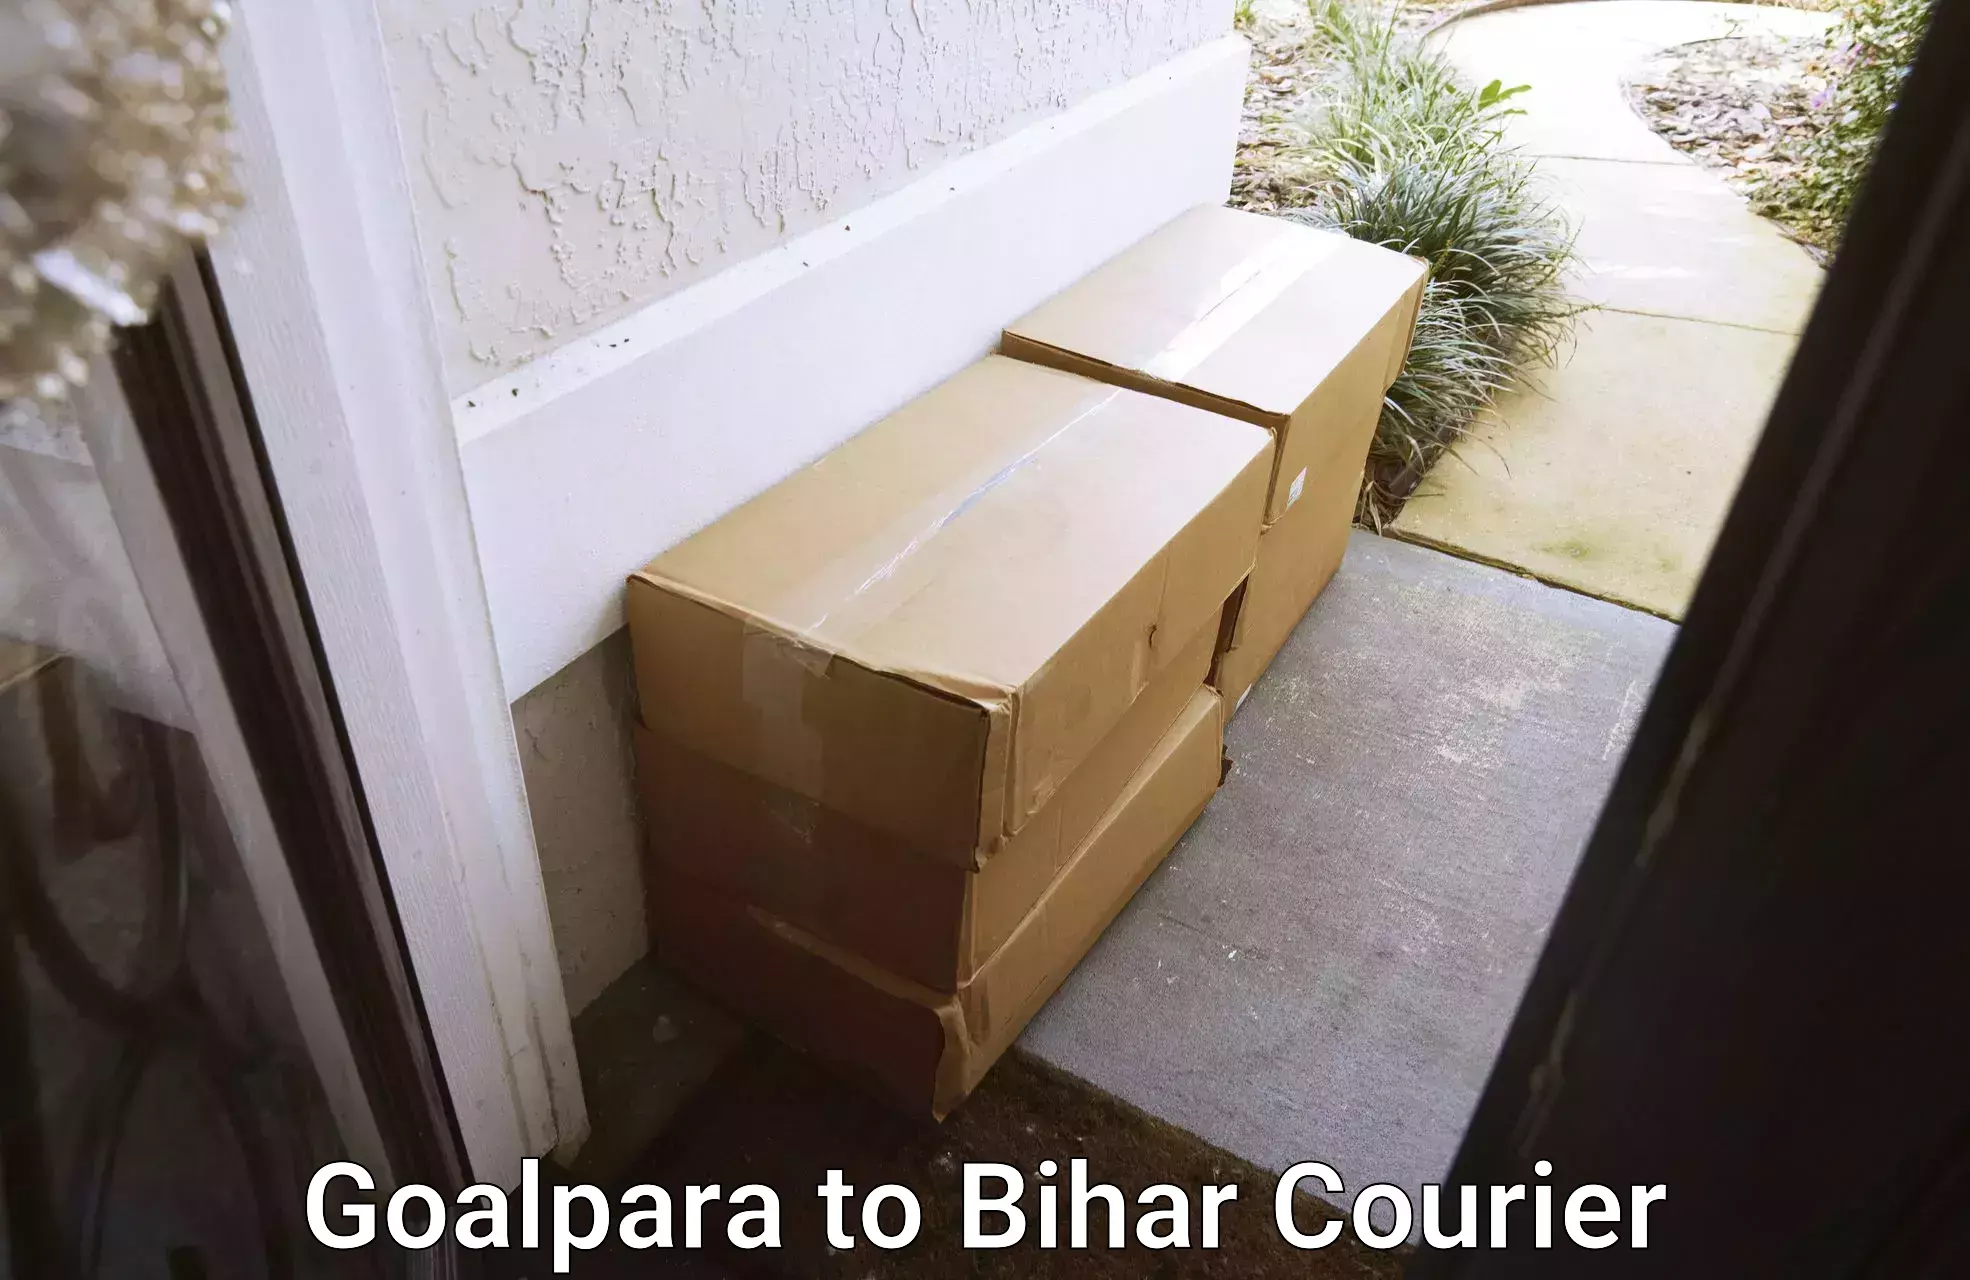 High-capacity parcel service Goalpara to Bharwara